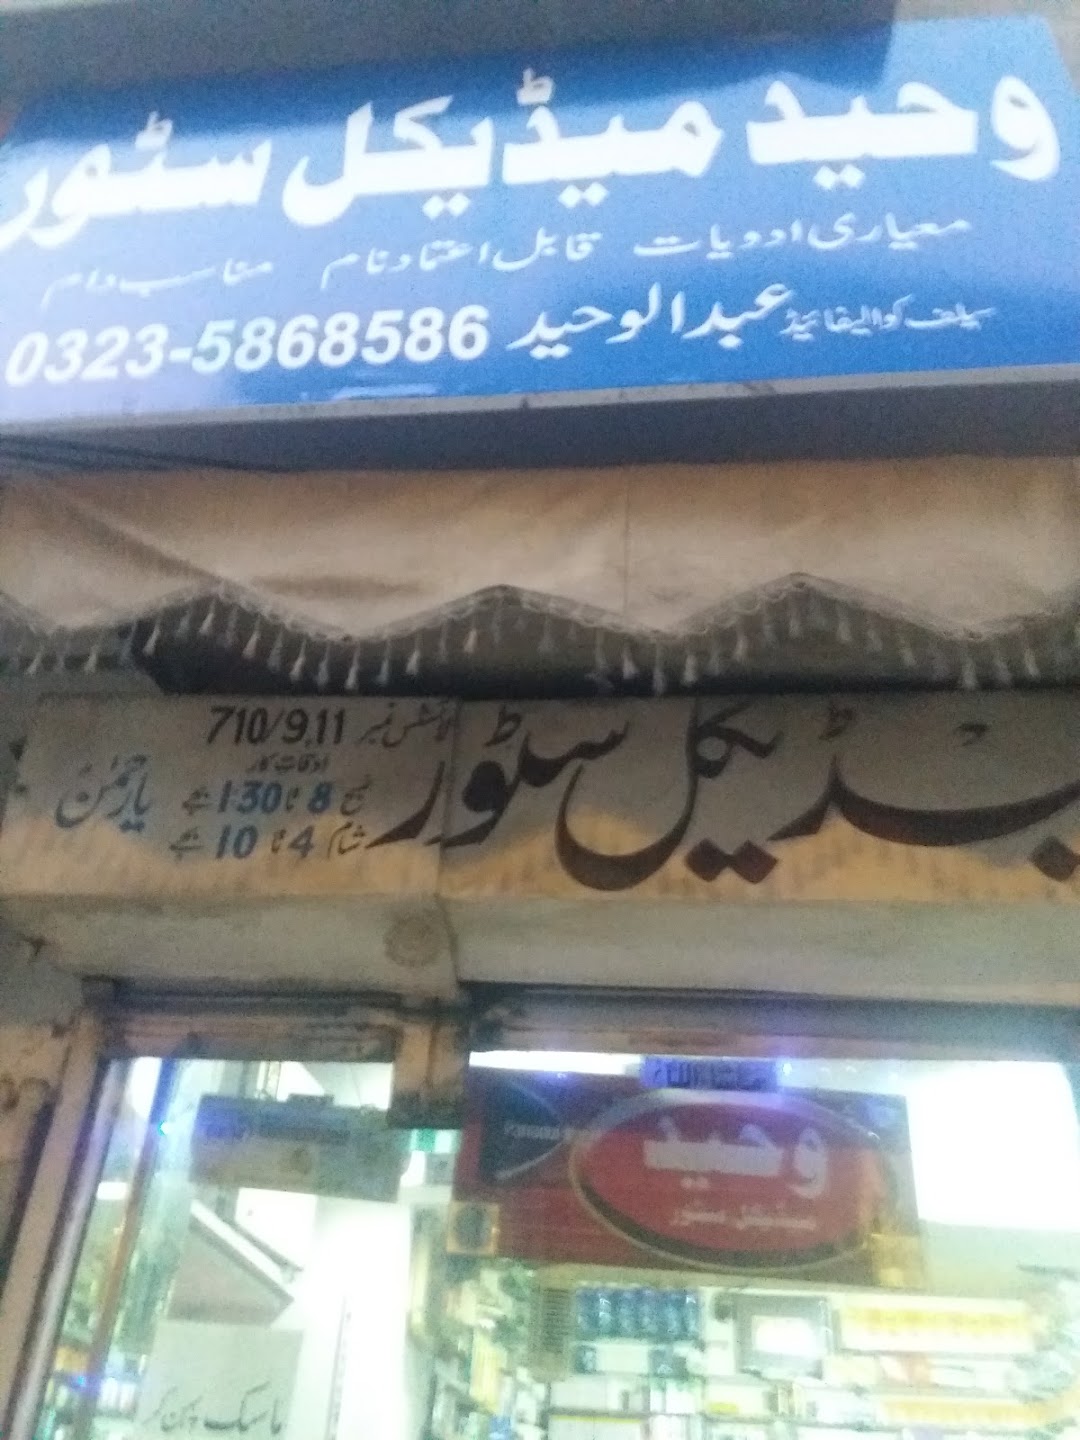 Waheed Medical store Taj din road r Last stop pakistan st7 shalimartown Lahorepakistan